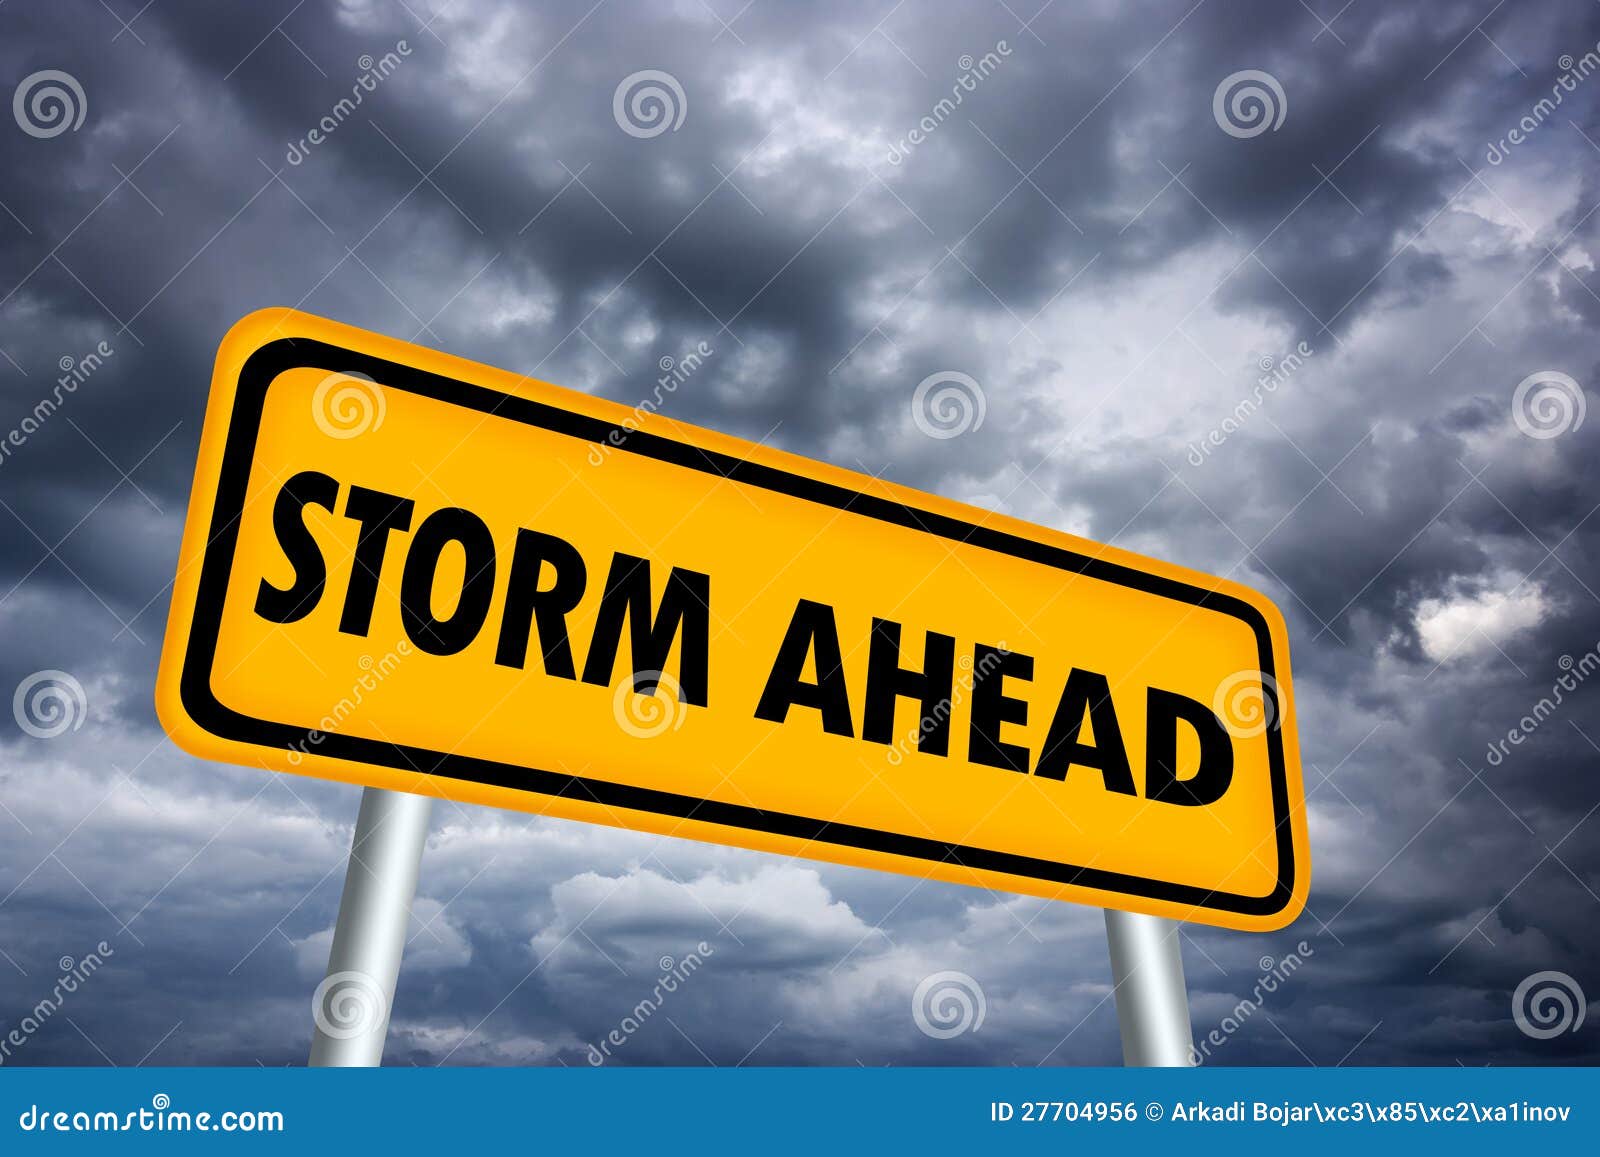 Storm warning sign stock illustration. Illustration of risk - 27704956